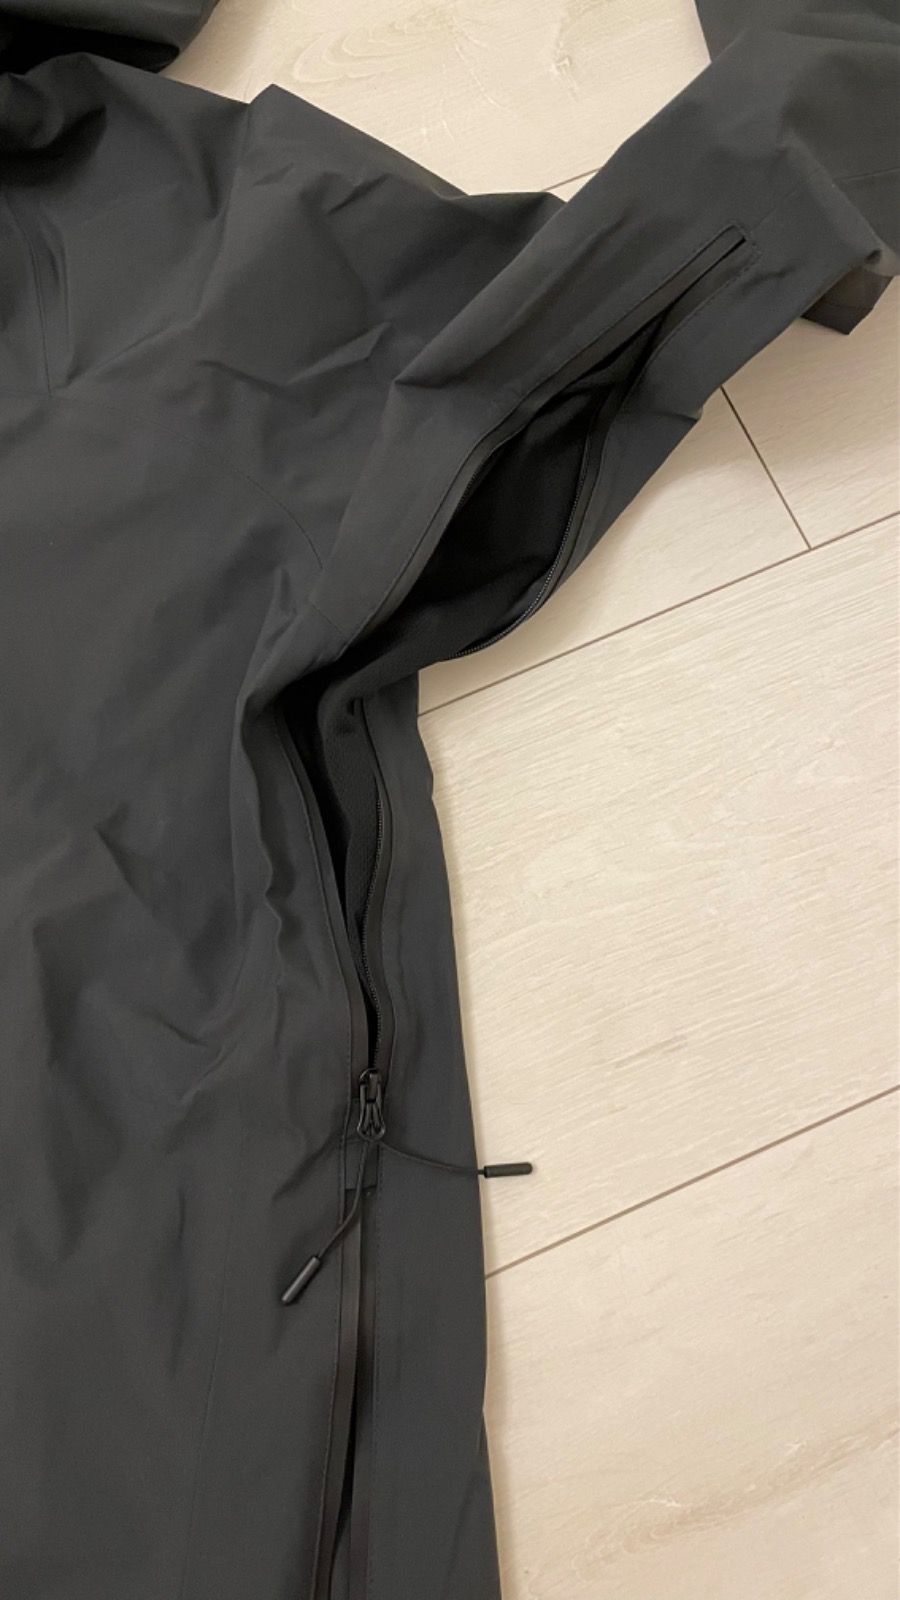 Ветровка iXS Carve All-Weather jacket